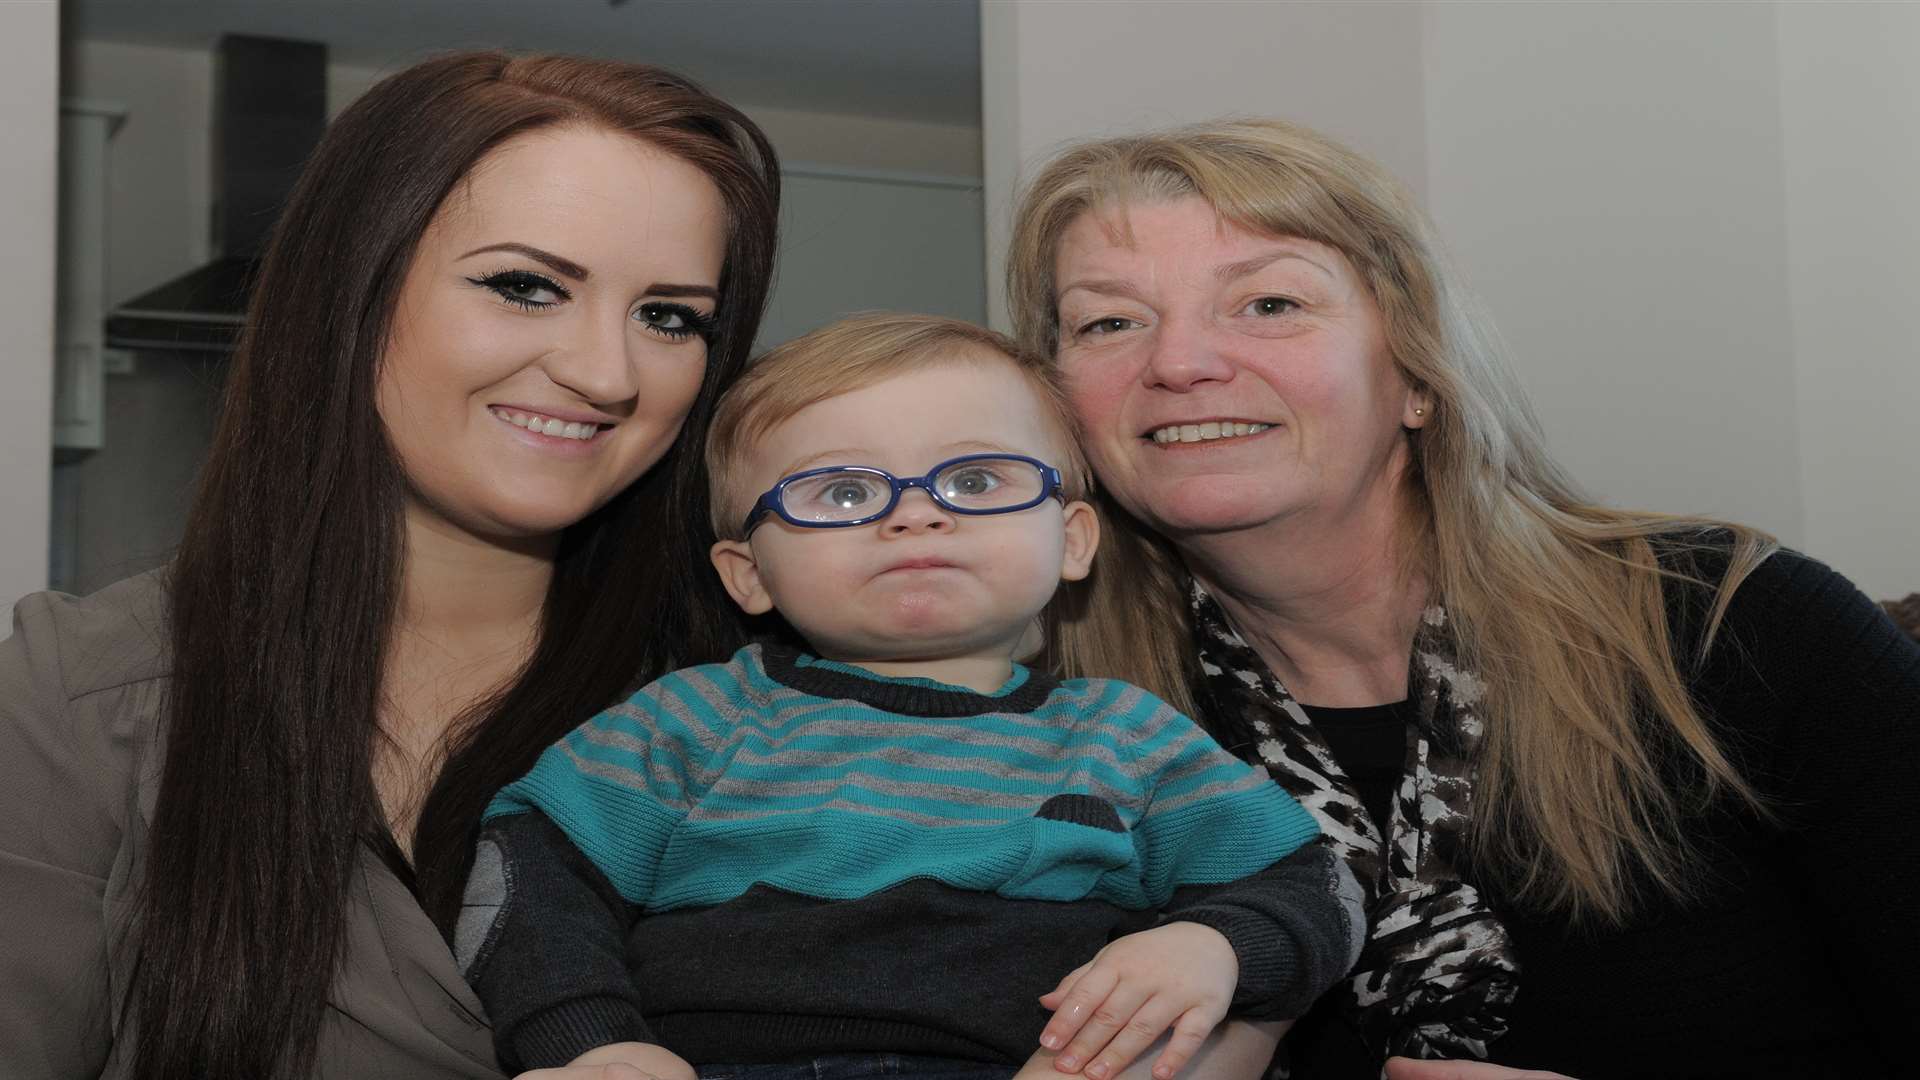 Midwife Debbie Newman, right, has won an award for saving baby Mason's life